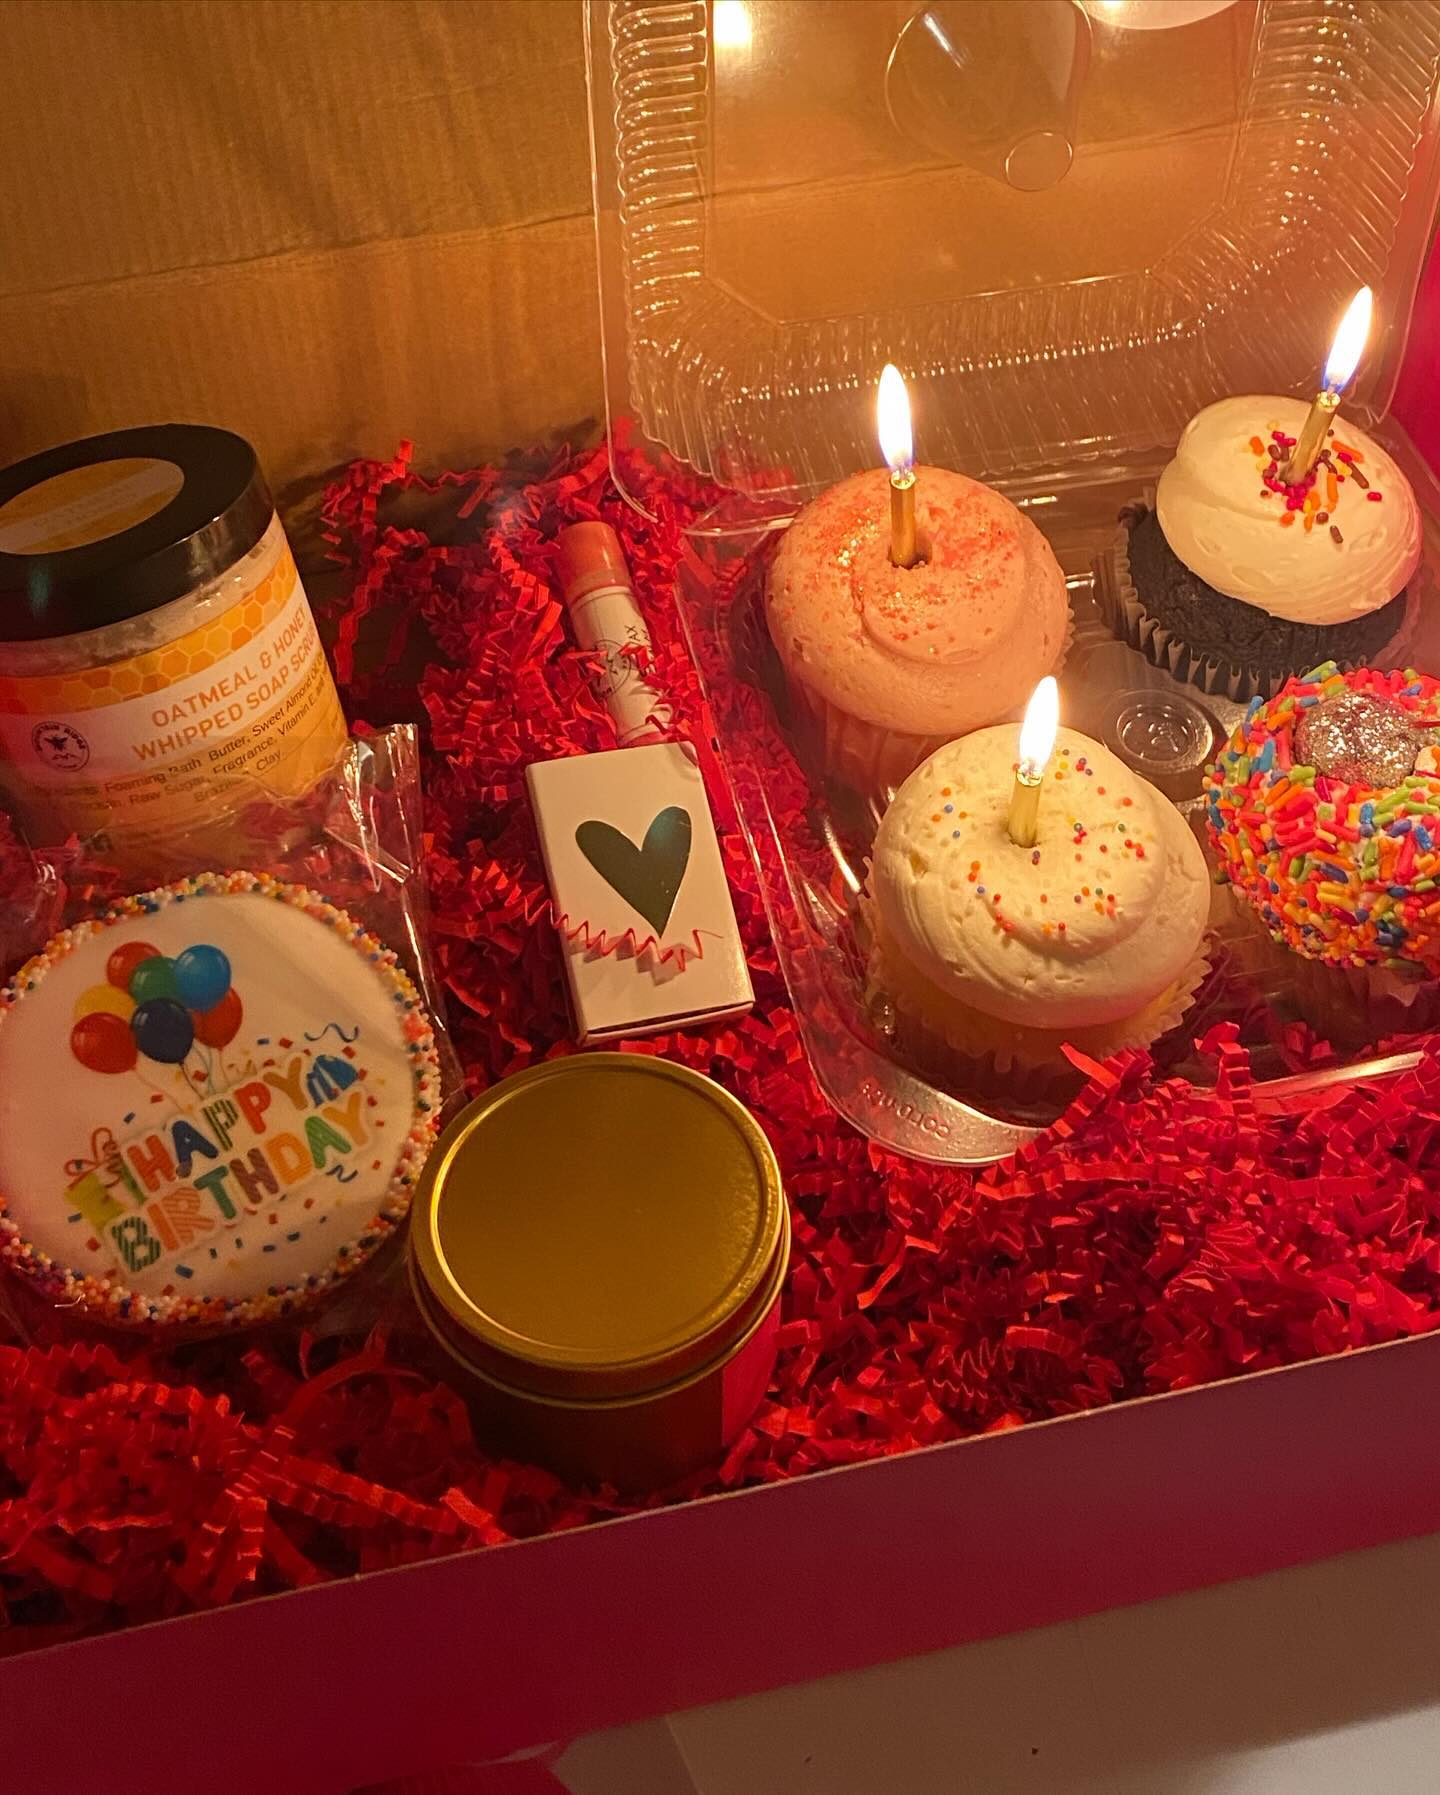 Happy 37 🎈 Bday To Me !! #bdaygirl #scorpion #happybirthday #grateful #loveislove #37 
-
-
Amazing bday cupcakes from @adycakes_pa  #cupcakes #readingpa #suportlocal #bdaycupcakes 

-
-